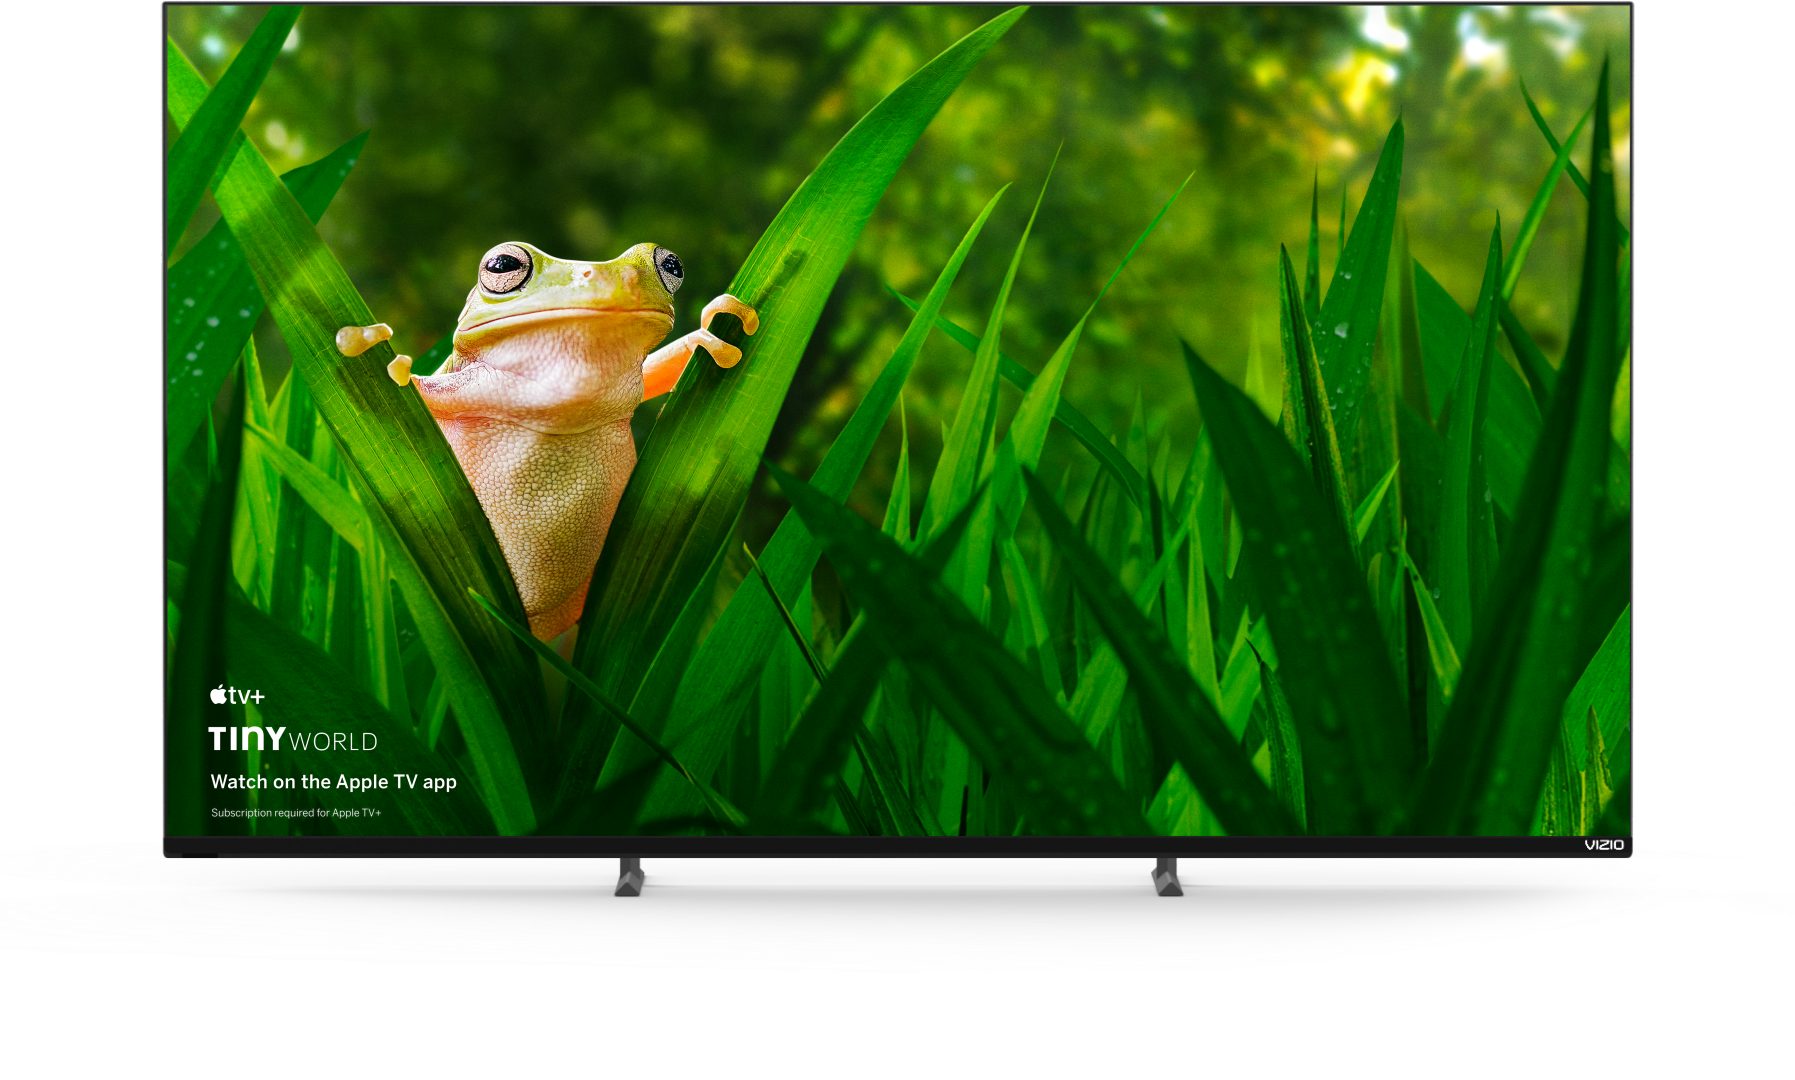  VIZIO 75 pulgadas serie M Quantum 4K UHD LED HDR Smart TV con  Apple AirPlay y Chromecast integrado, Dolby Vision, HDR10+, HDMI 2.1,  velocidad de actualización variable, modelo M75Q6-J03, 2021 